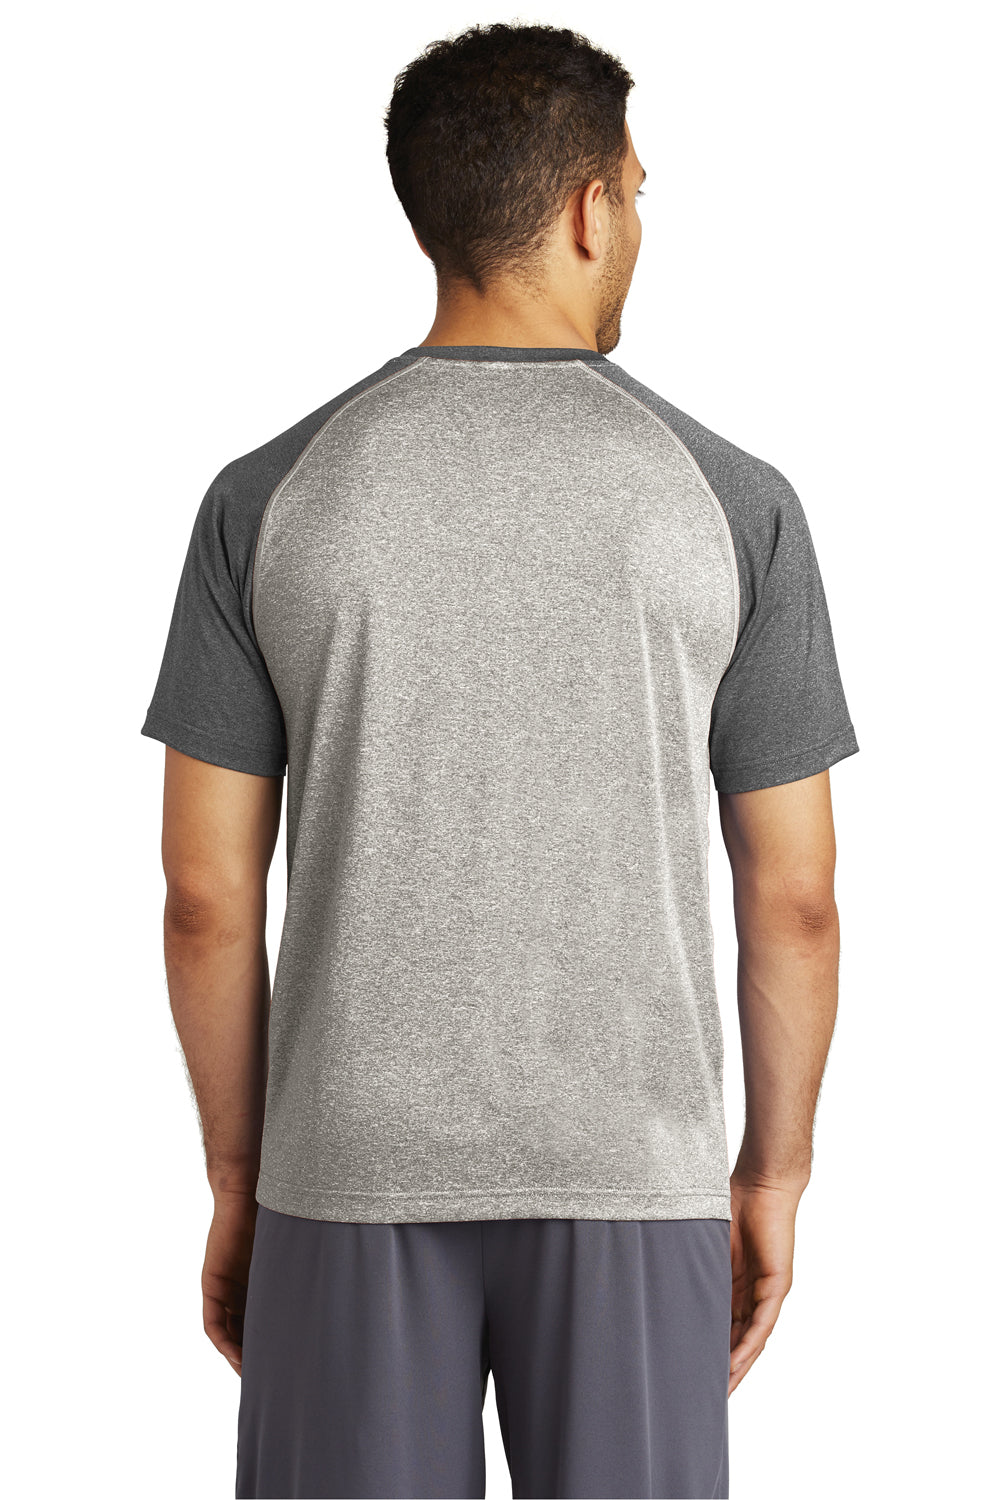 Sport-Tek ST362 Mens Contender Heather Moisture Wicking Short Sleeve Crewneck T-Shirt Vintage Grey/Graphite Grey Back